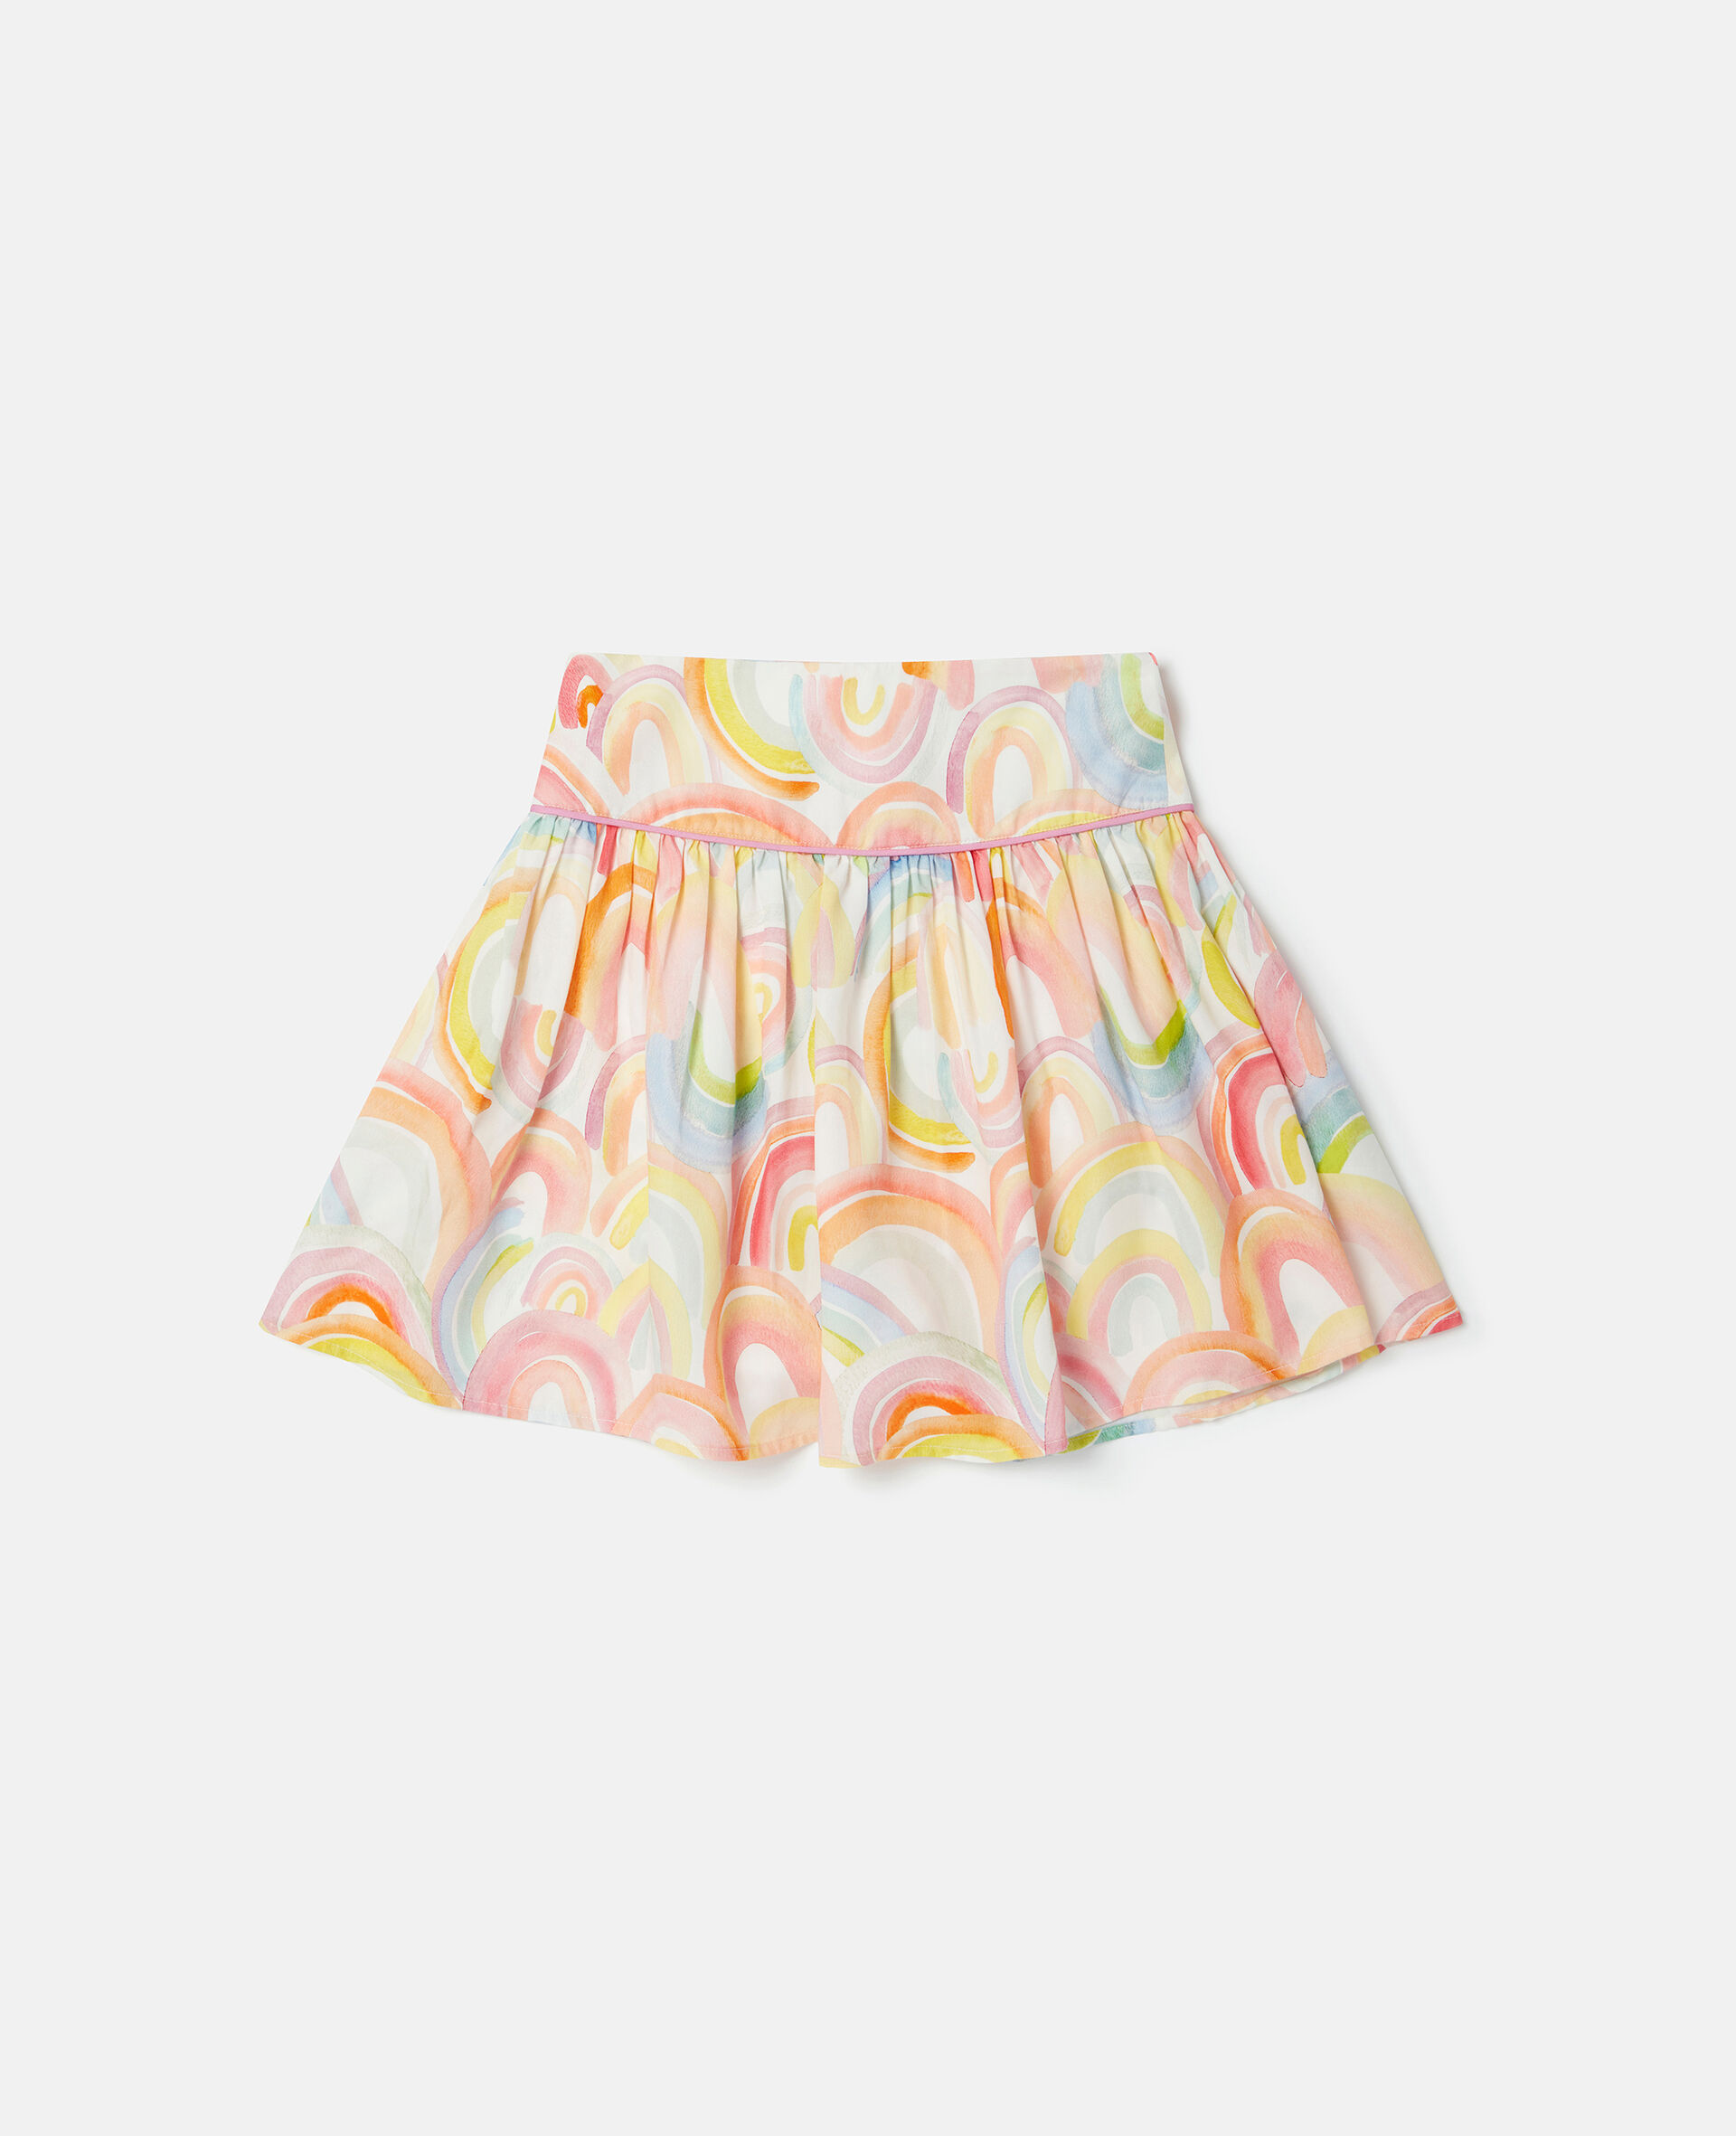 Watercolour Rainbow Print Skater Skirt-Multicolour-large image number 0